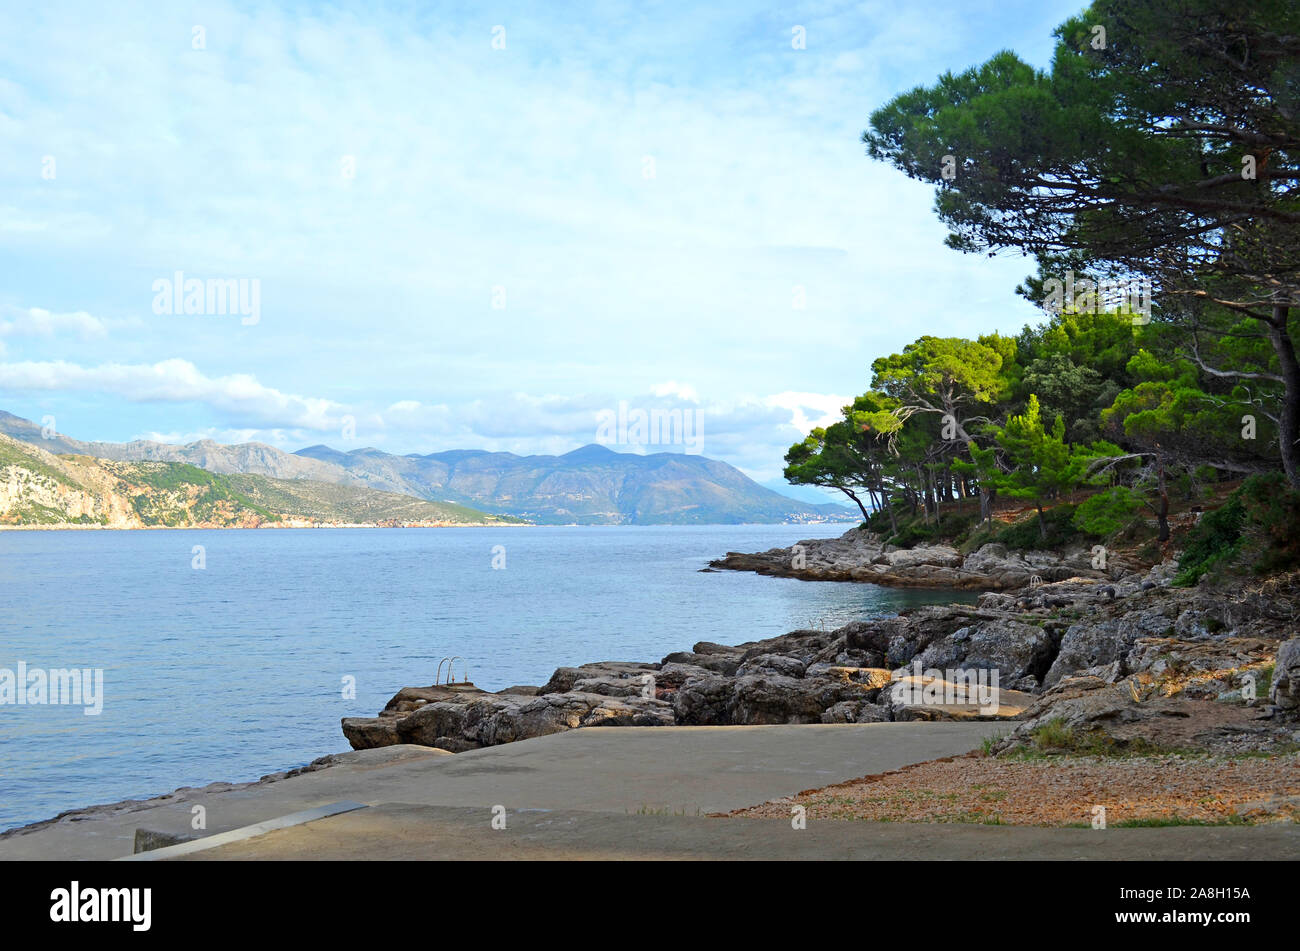 El paisaje de la isla de Lokrum en Dubrovnik (Croacia) Foto de stock